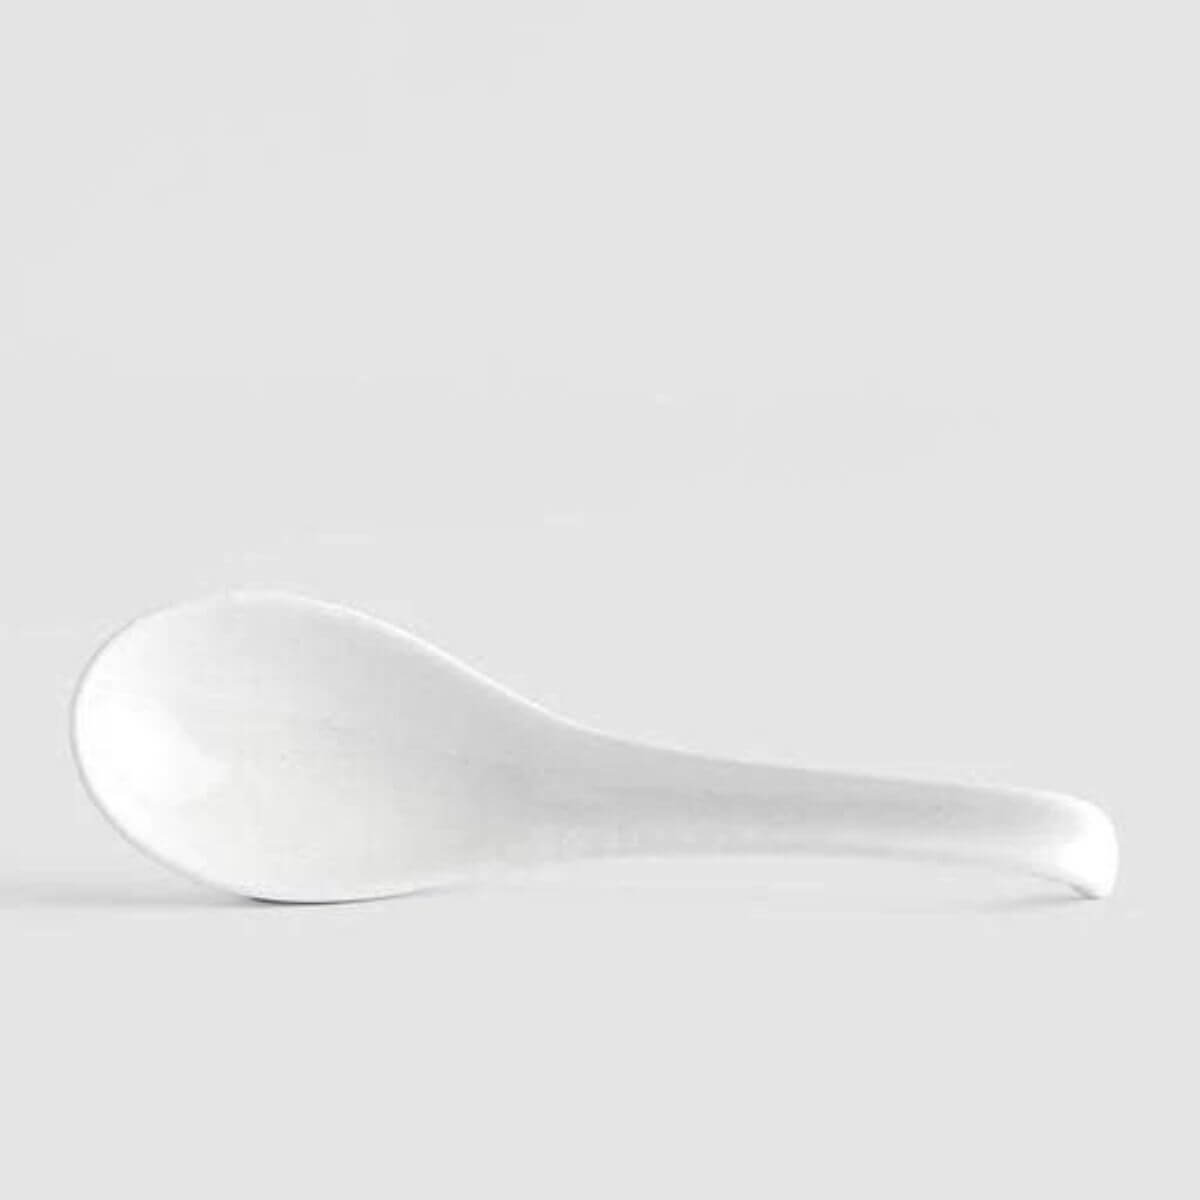 Naibu Large Spoon White